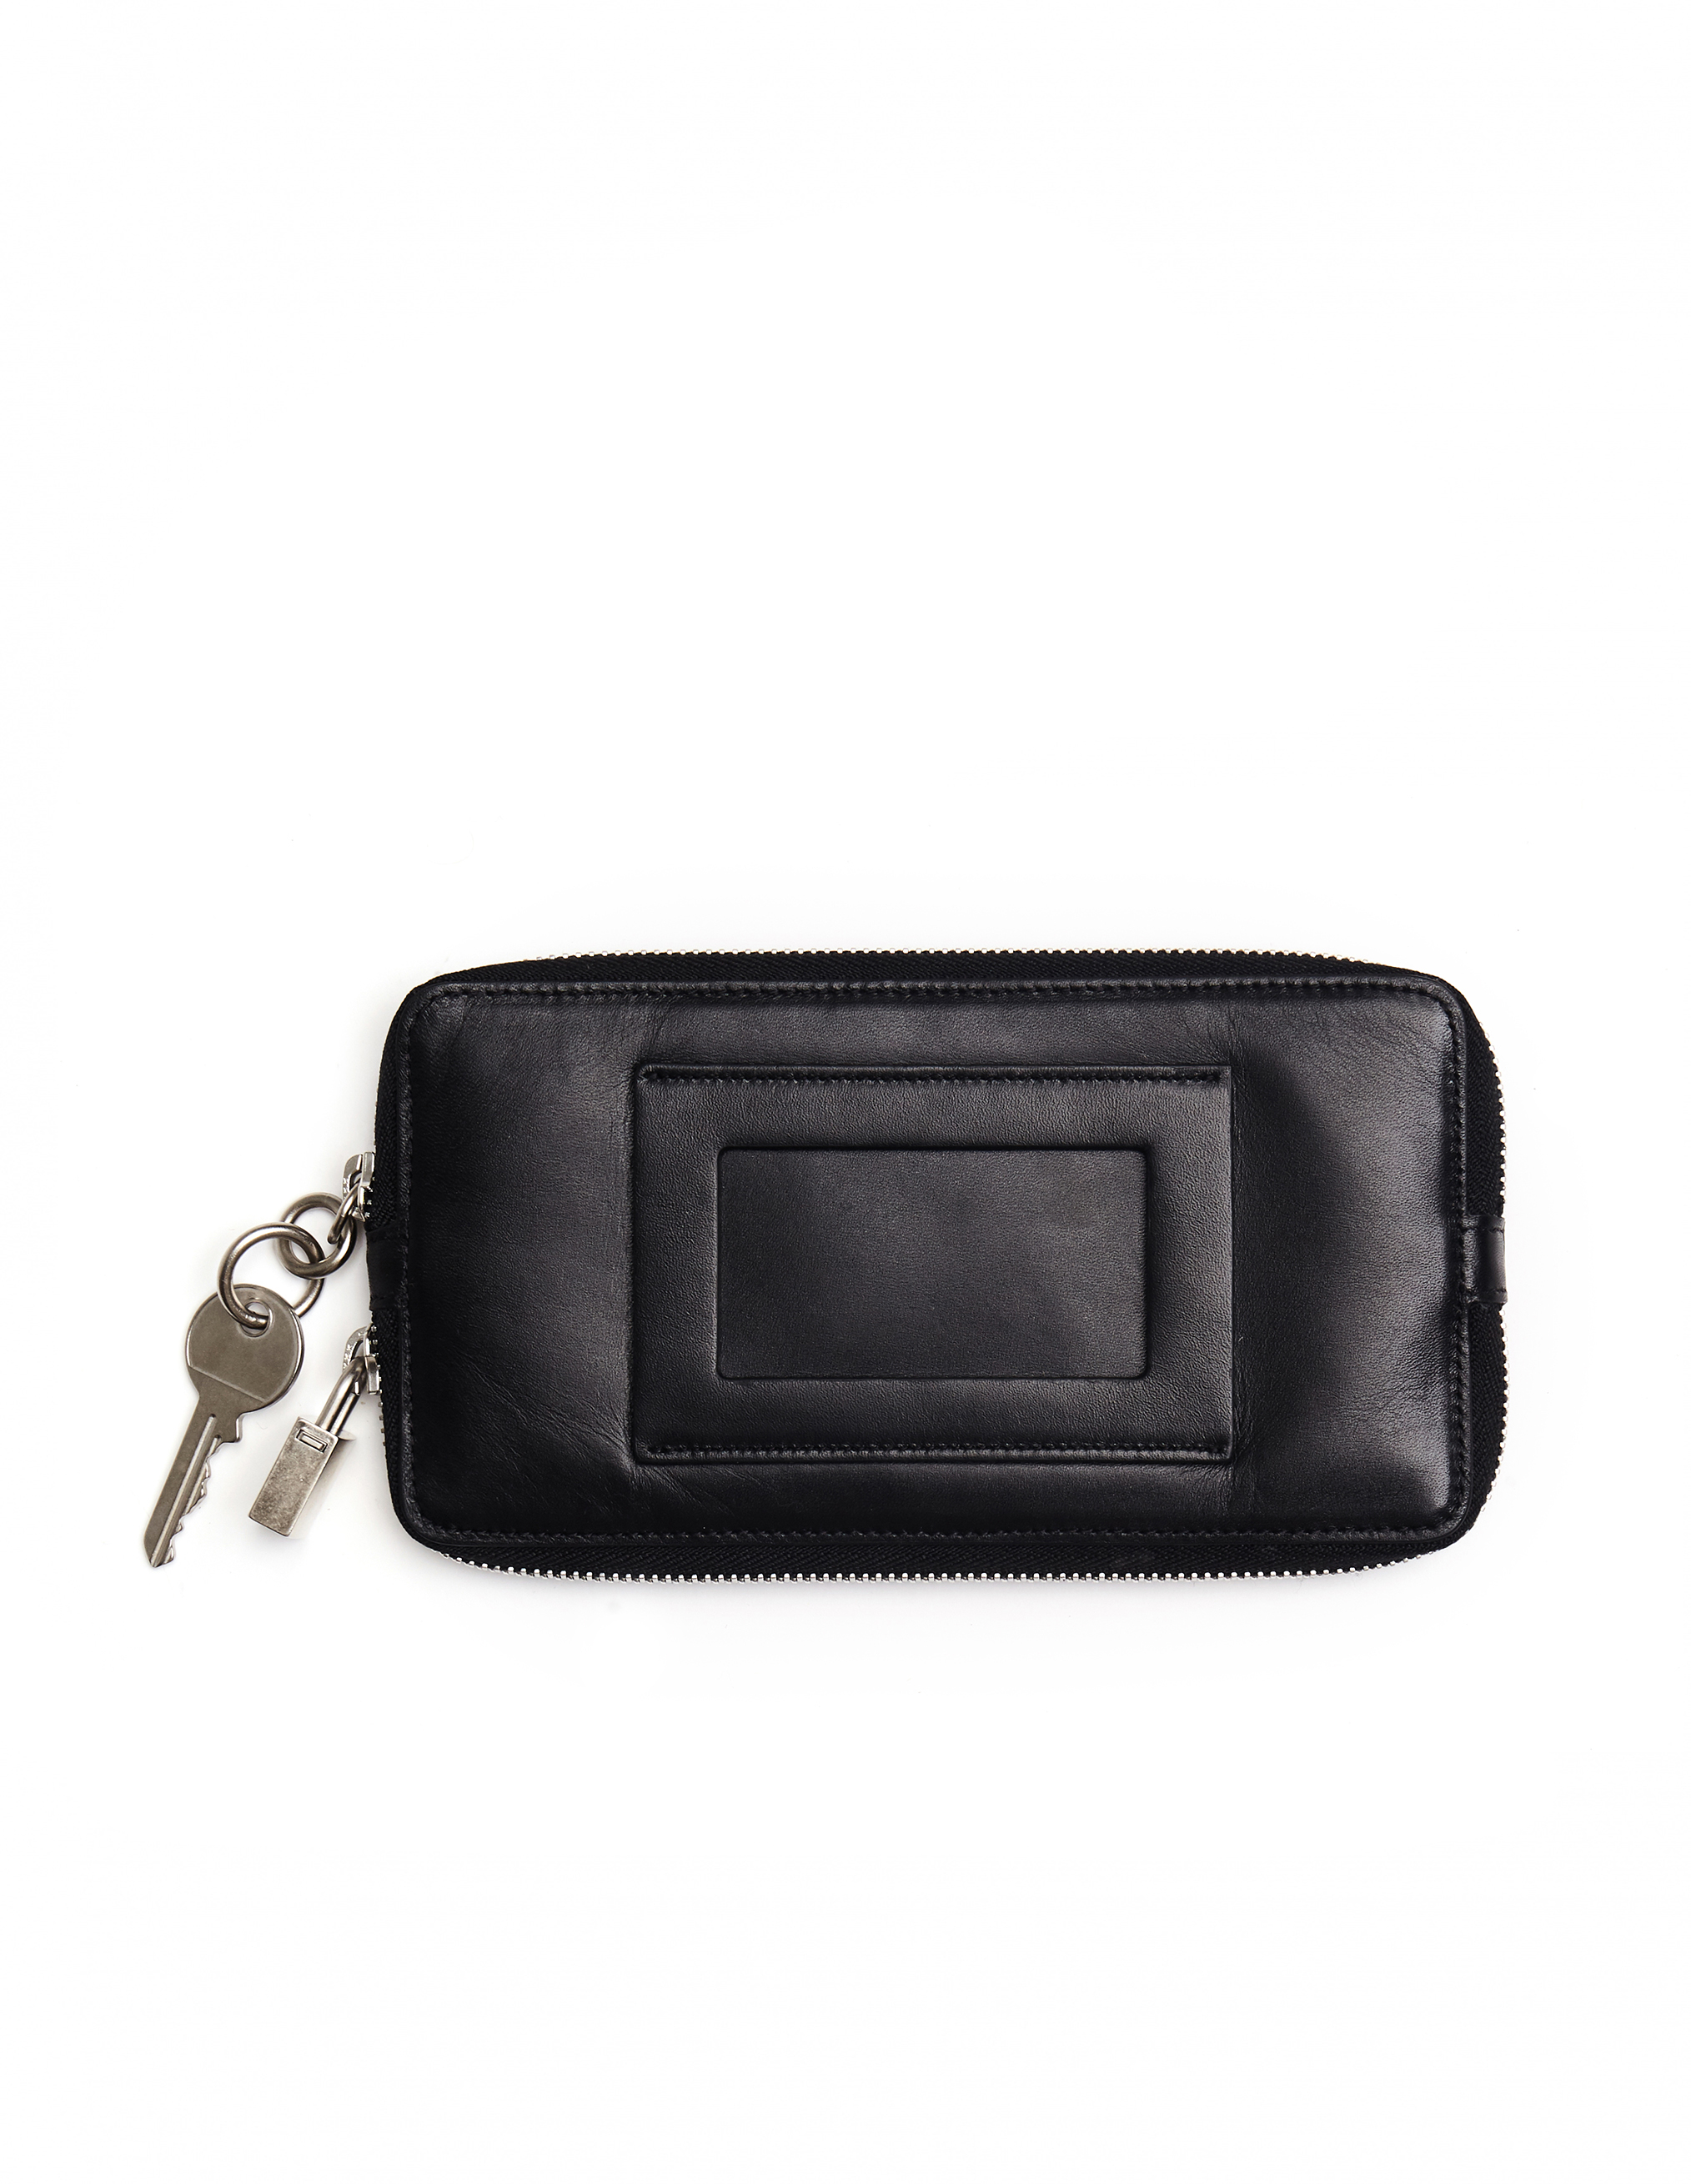 Maison Margiela | Black Leather Wallet | SVMOSCOW.COM